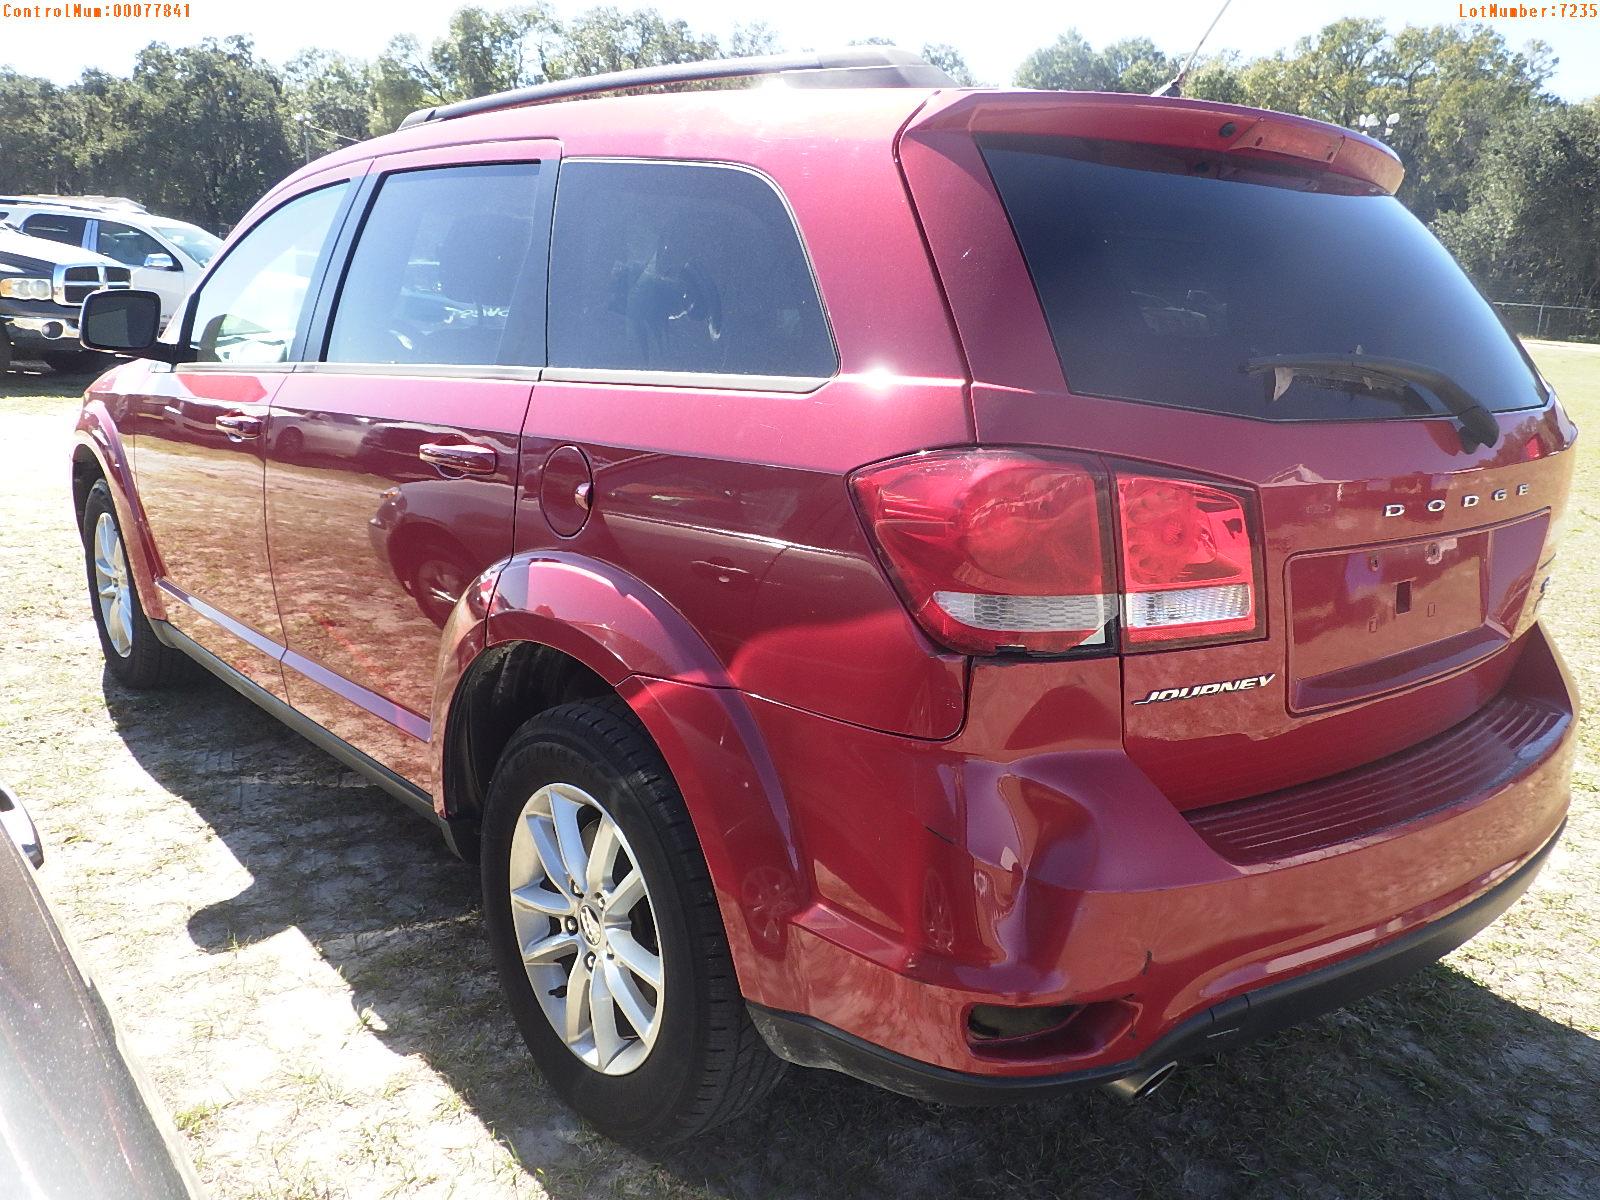 5-07115 (Cars-SUV 4D)  Seller:Private/Dealer 2015 DODG JOURNEY